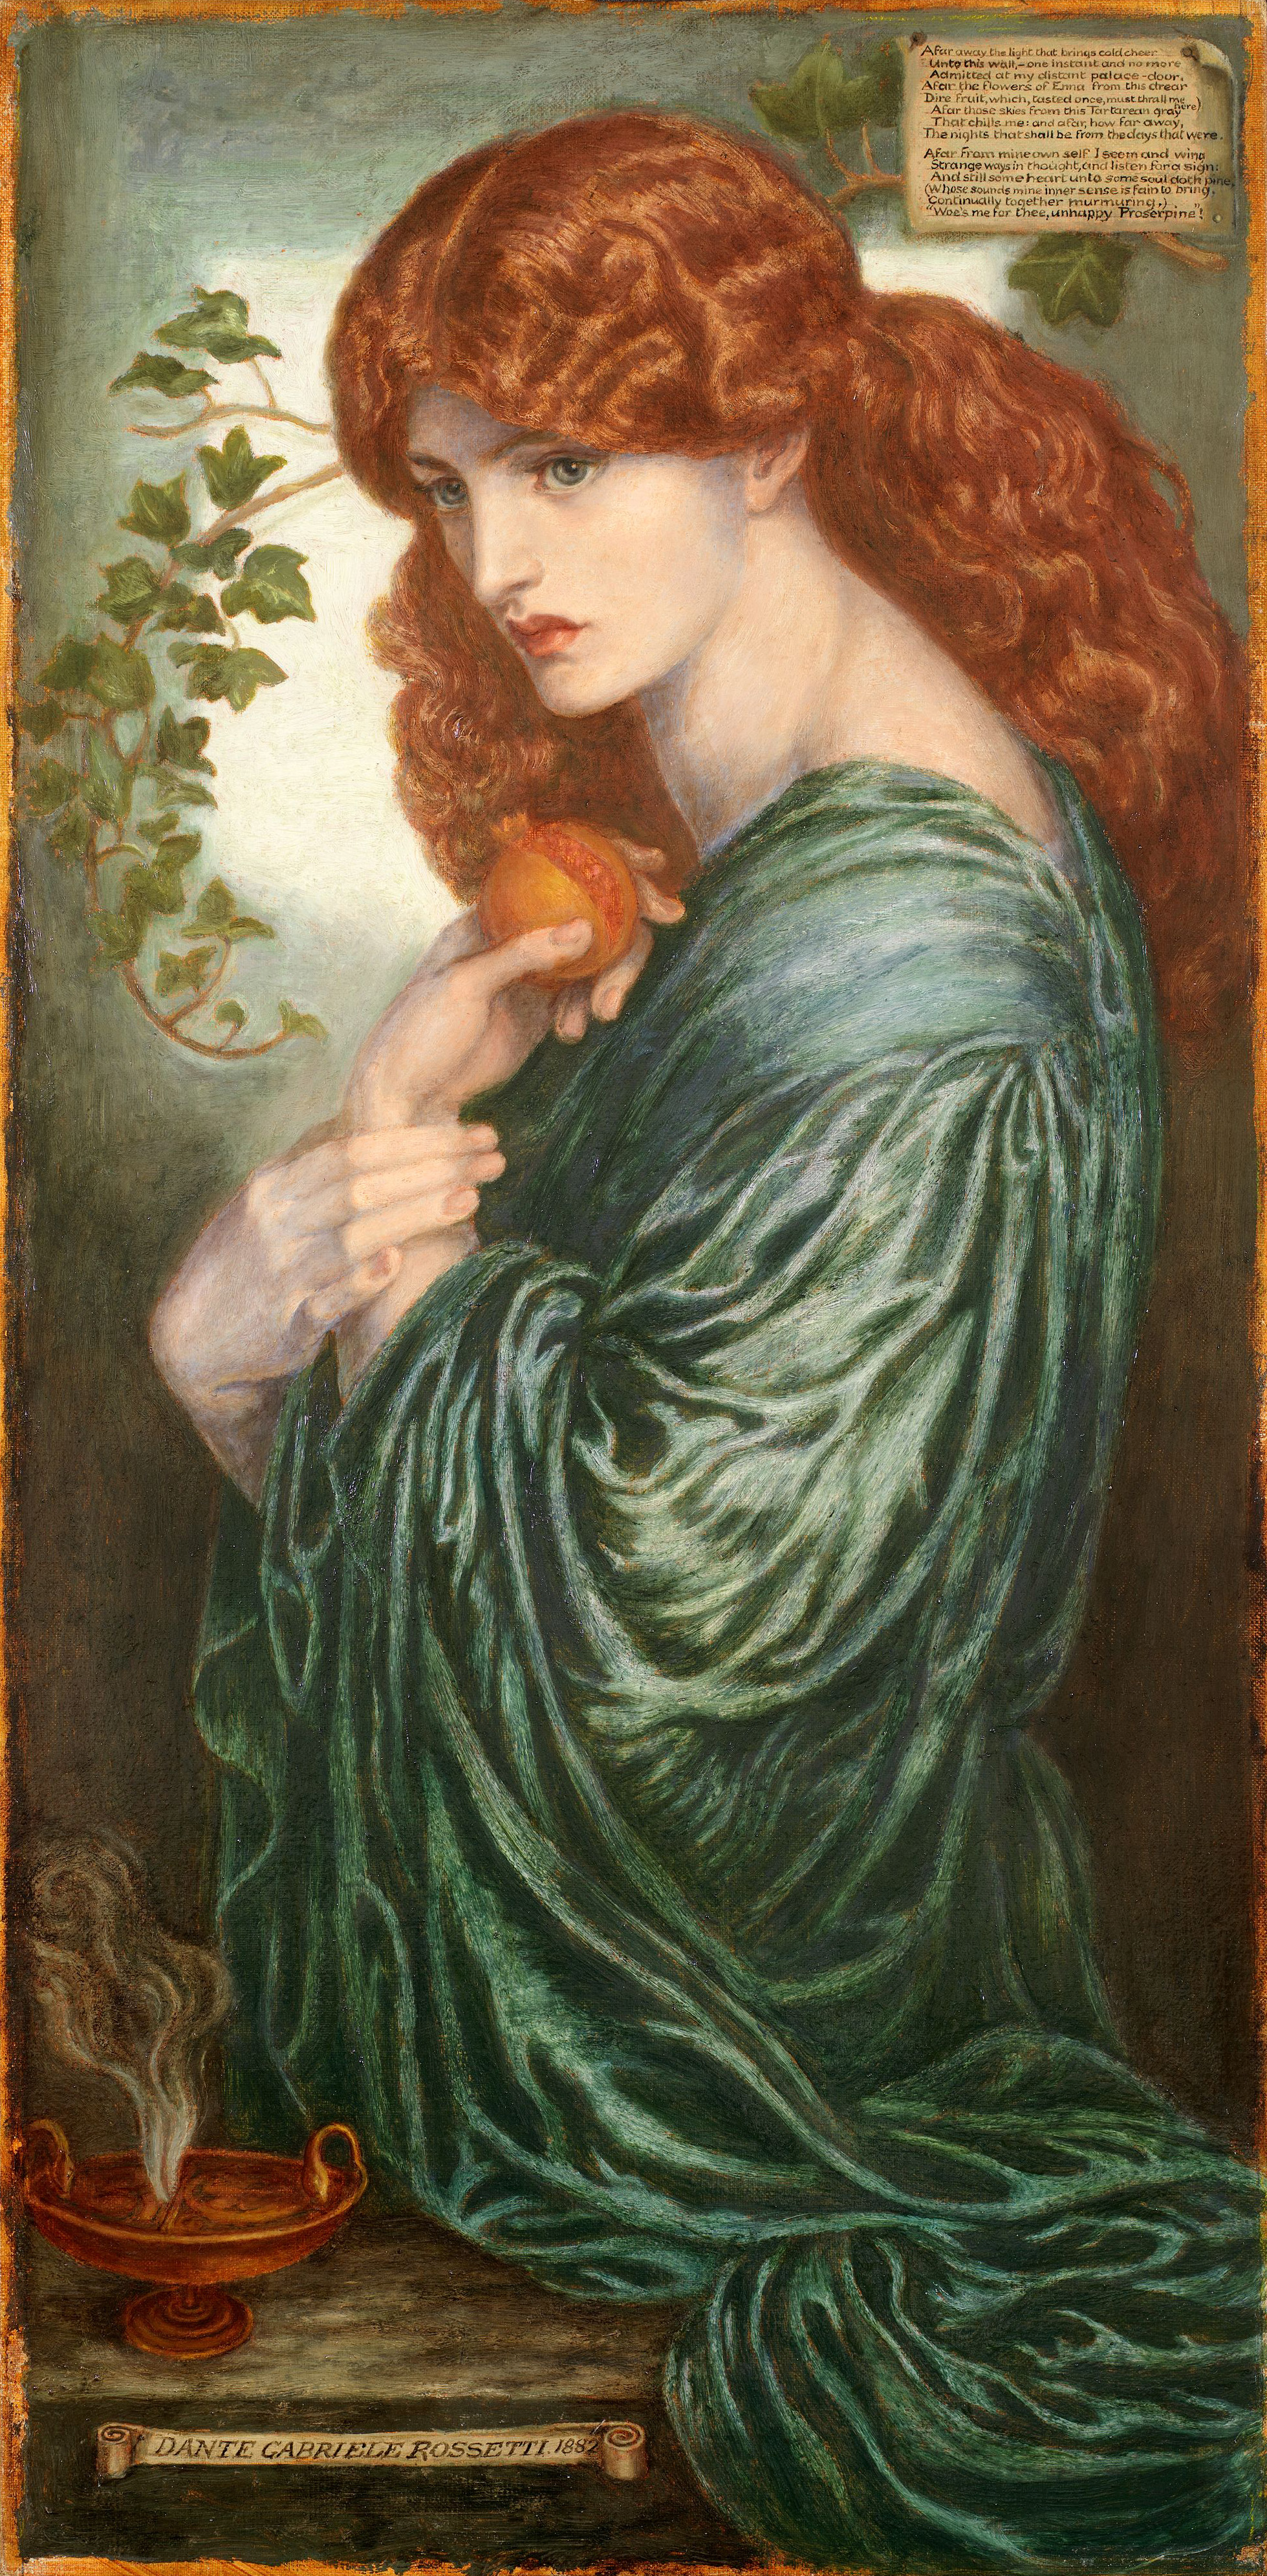 Rossetti Proserpina: Dante Gabriel Rossetti, Proserpine, 1874, Tate, London, UK.